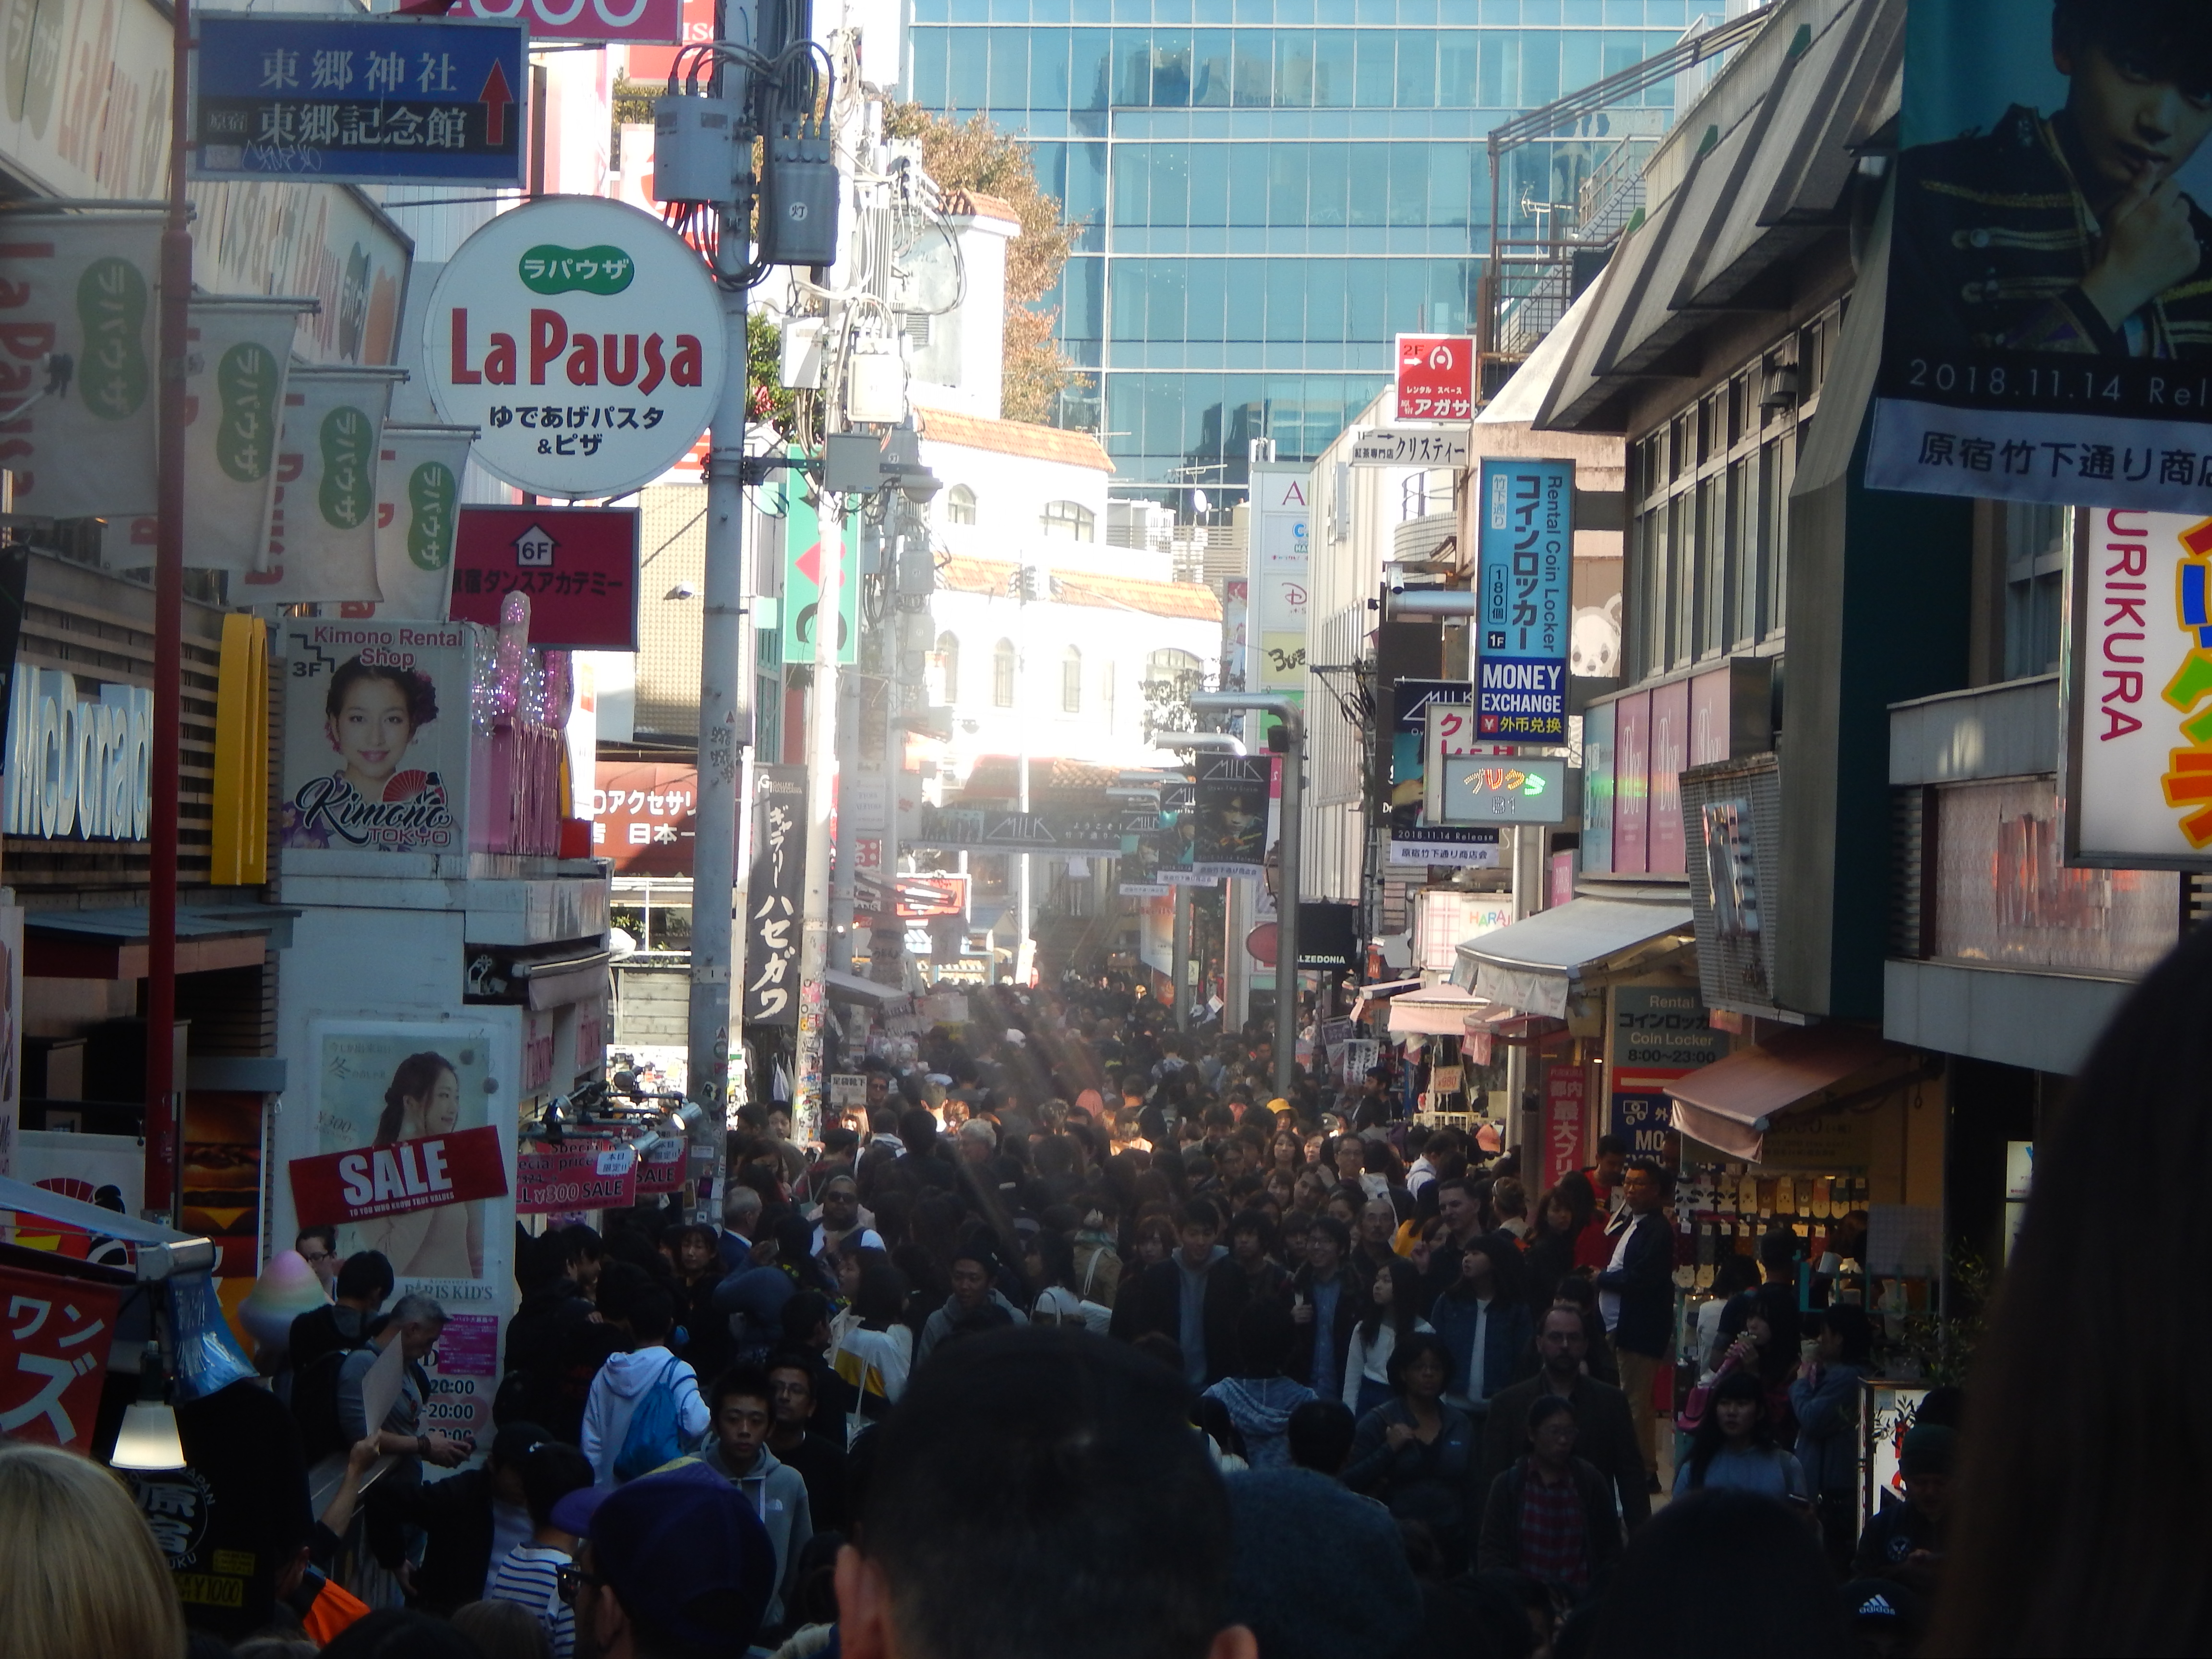 The crowds of Takeshita Shopping Street